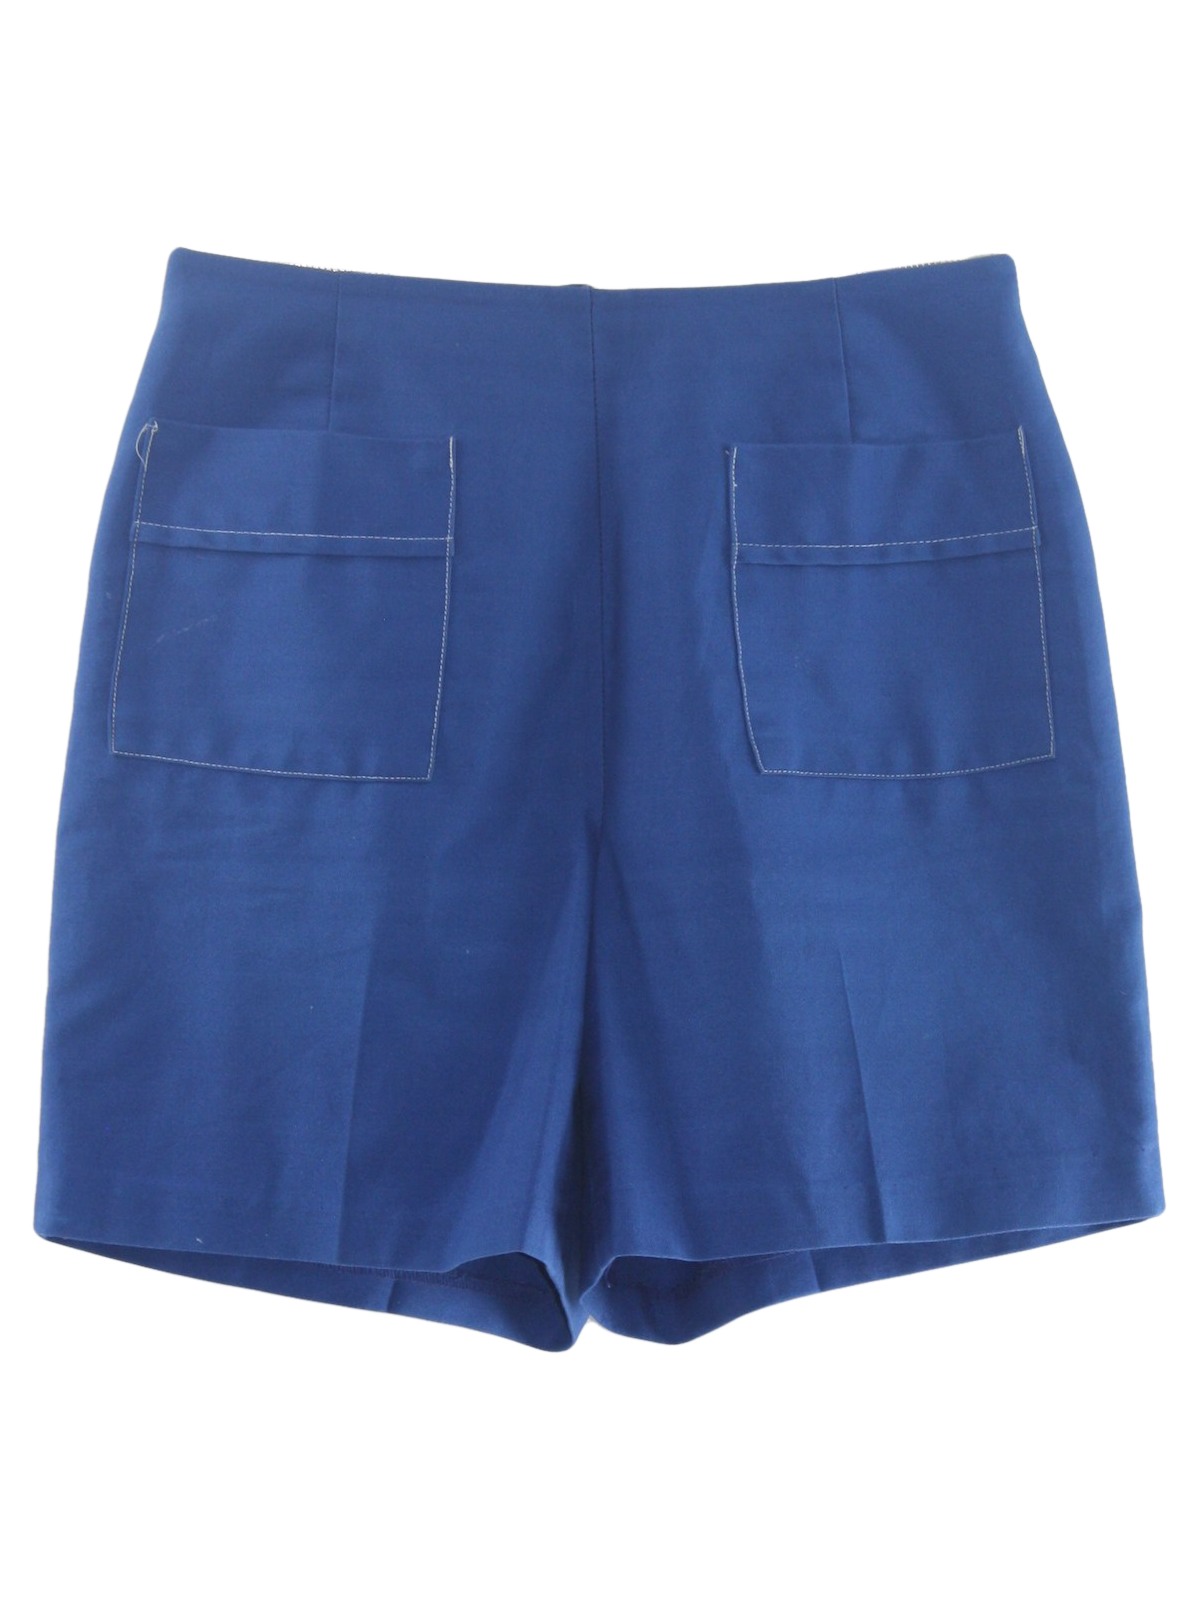 Retro 1970's Shorts (Home Sewn) : 70s -Home Sewn- Womens royal blue ...